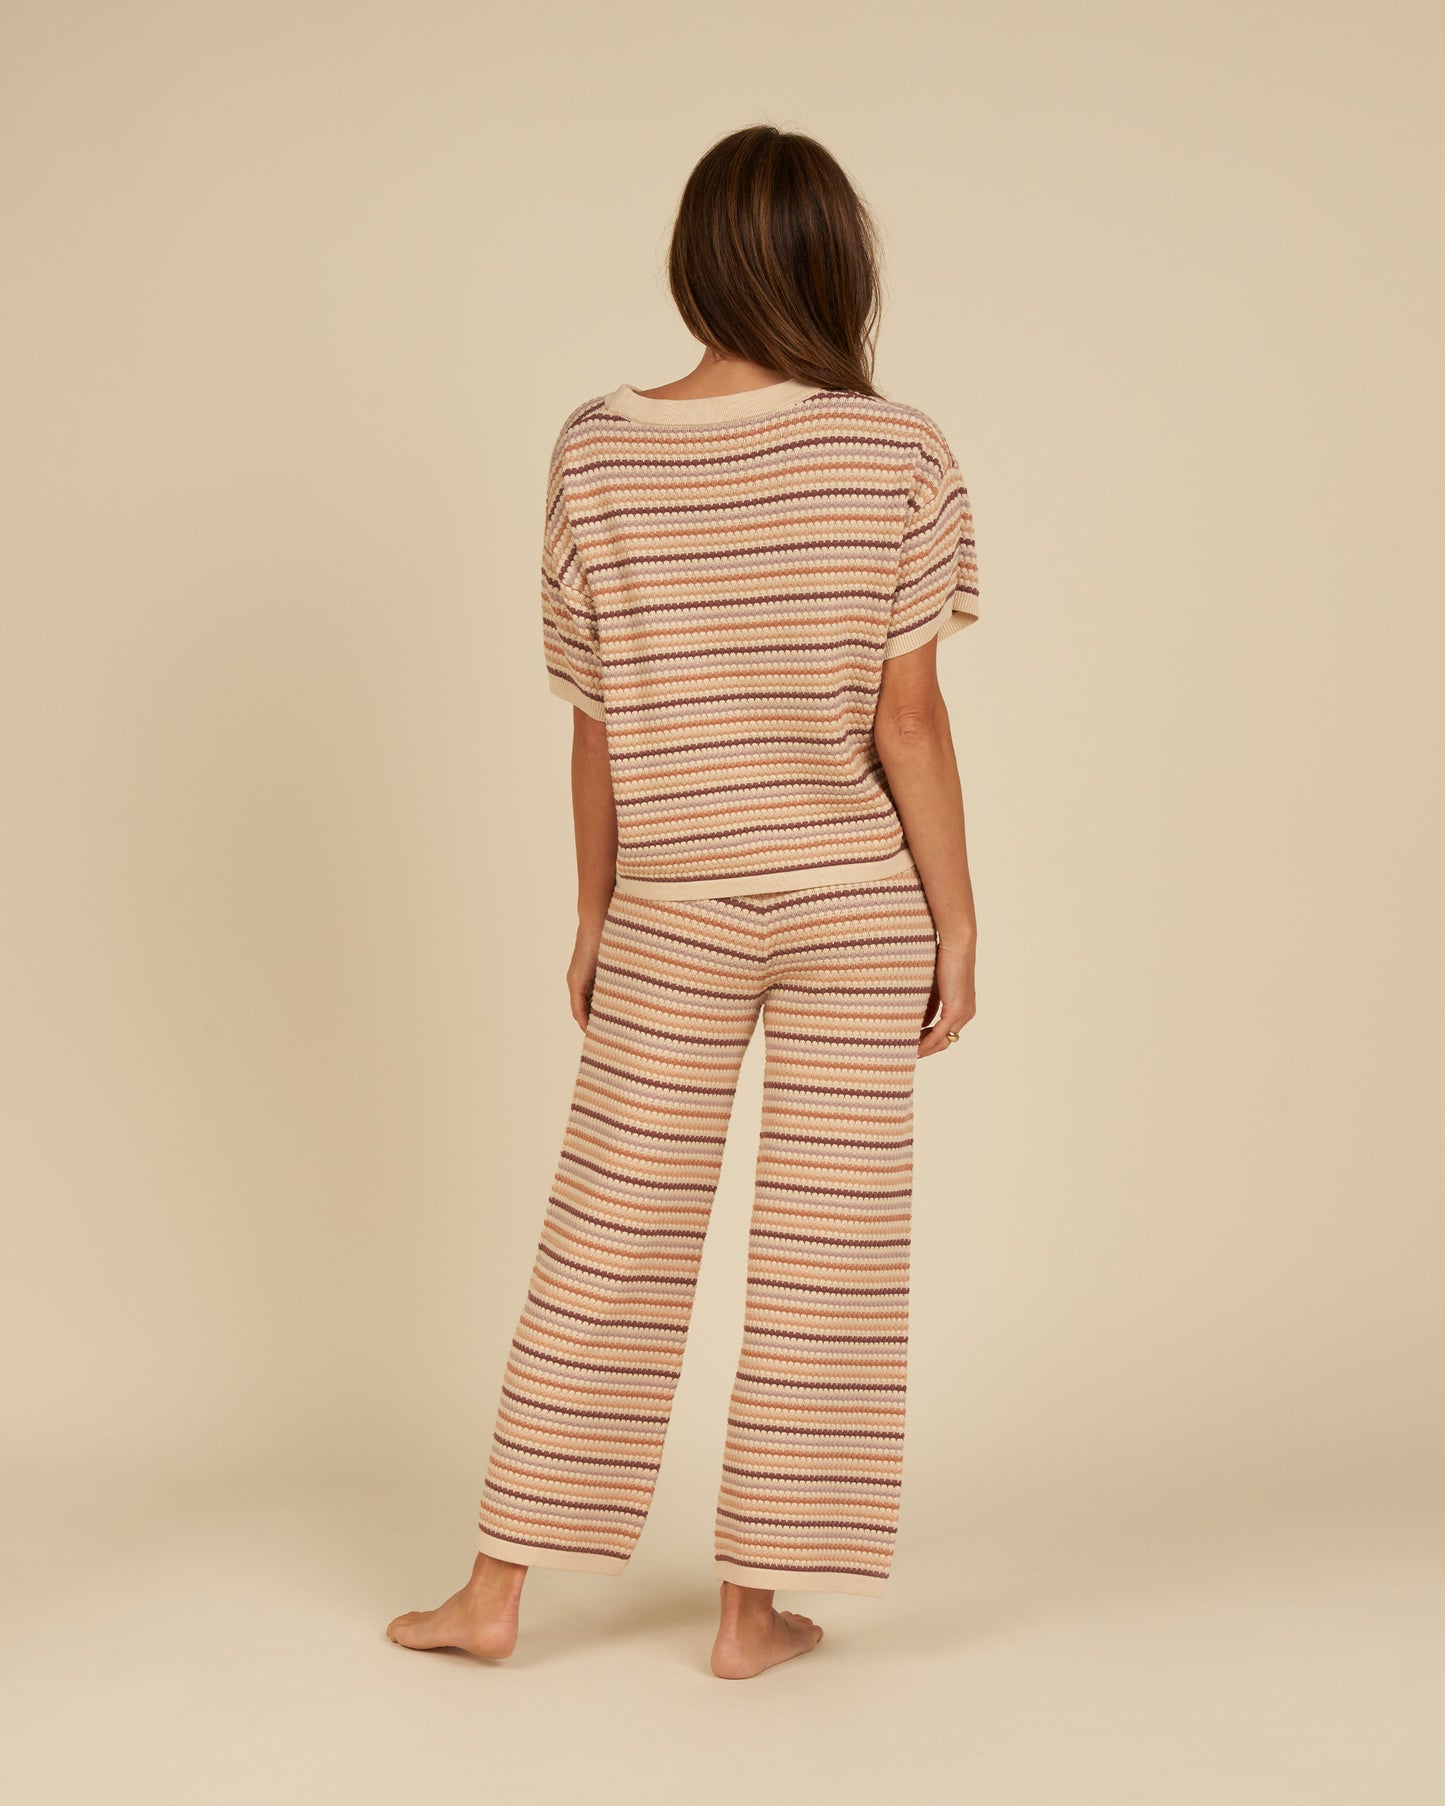 Rylee + Cru - Women's Knit Wide Leg Pant - Honeycomb Stripe